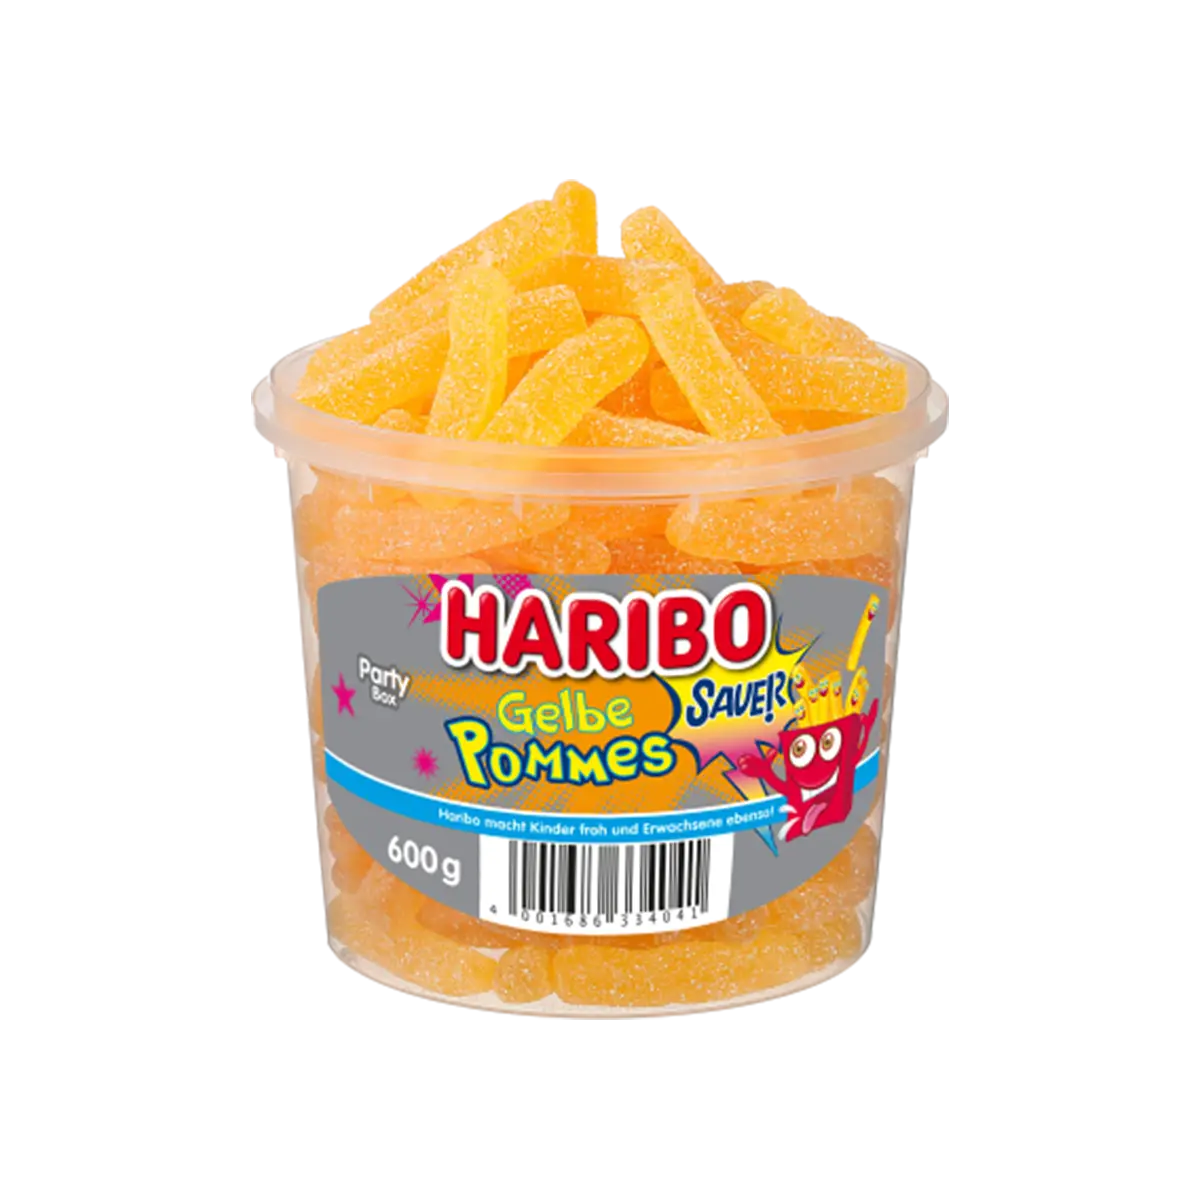 Haribo 'Saure Pommes" sour fries, 600 g